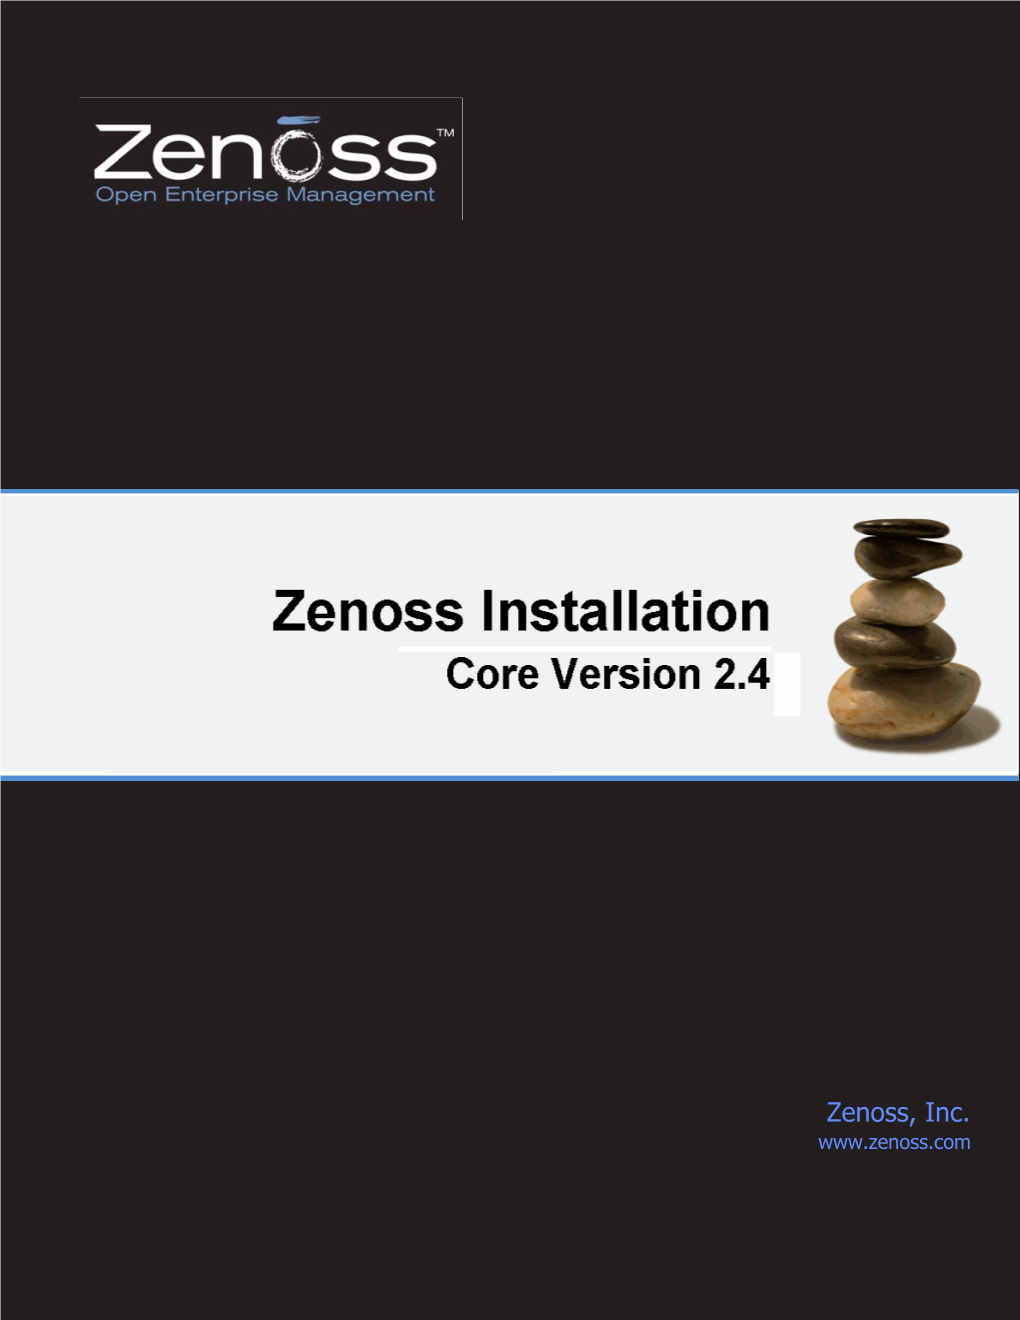 Zenoss Installation for Core Version